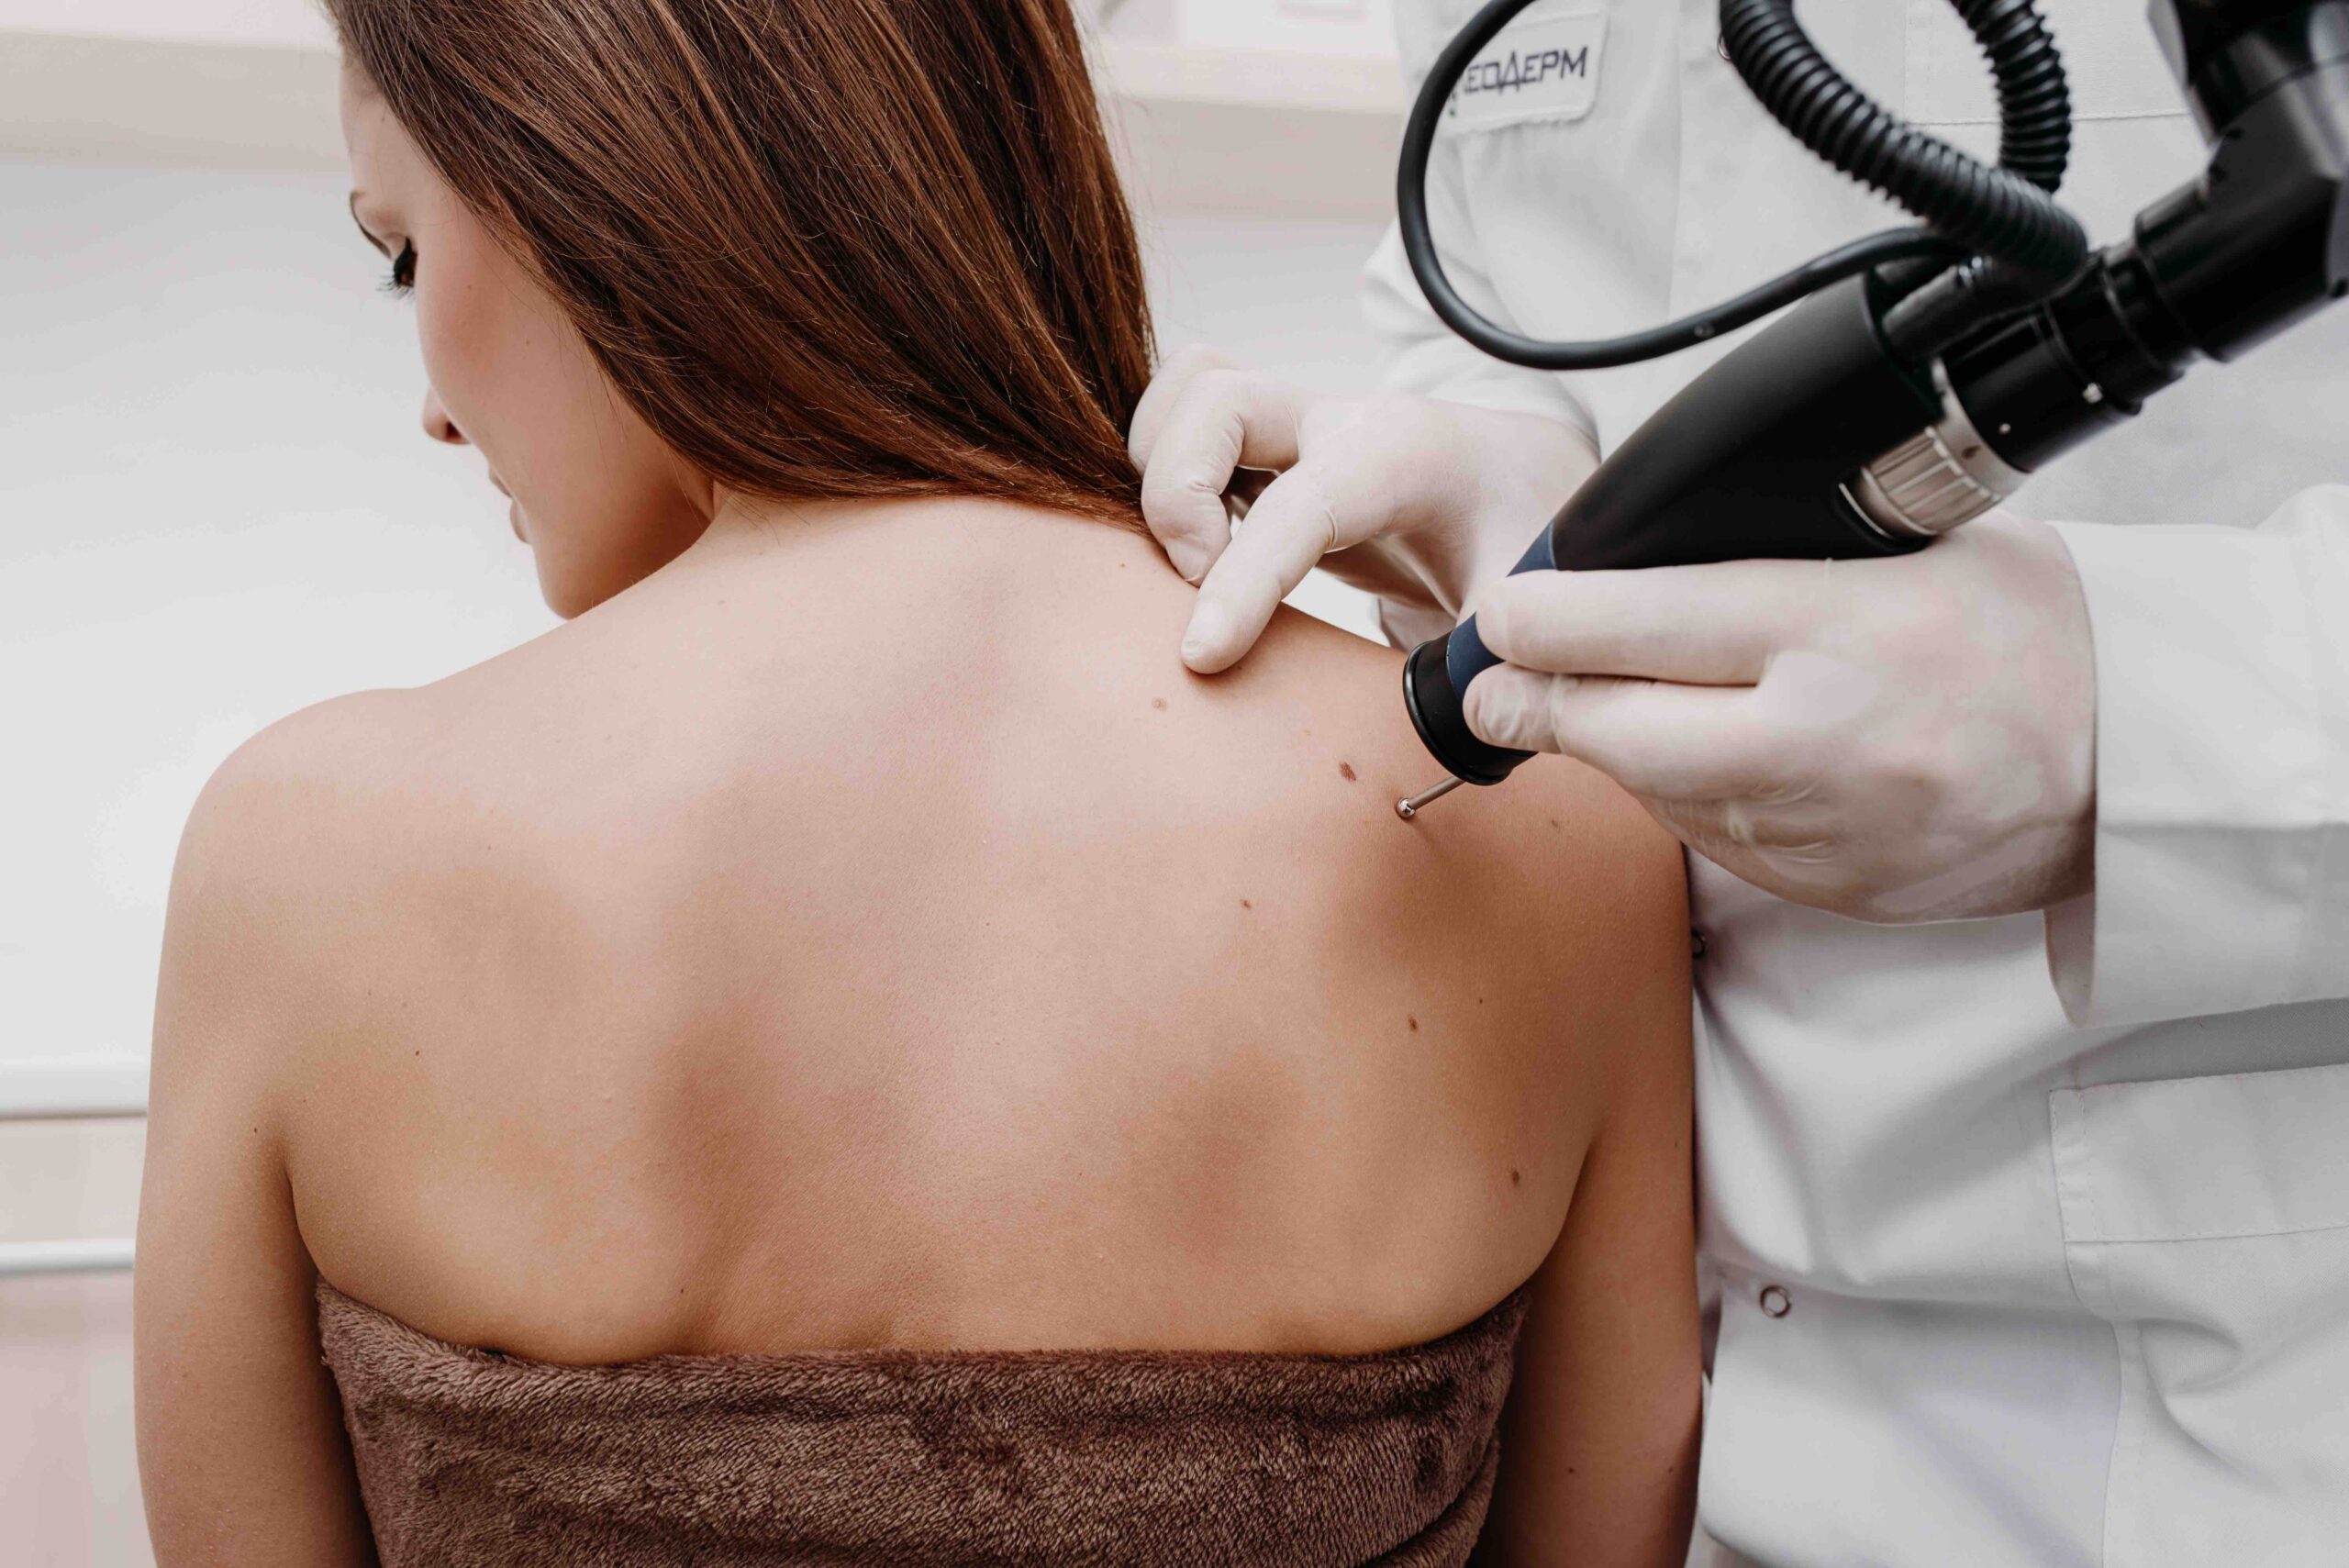 Doctor using dermatoscope on moles on woman's back.